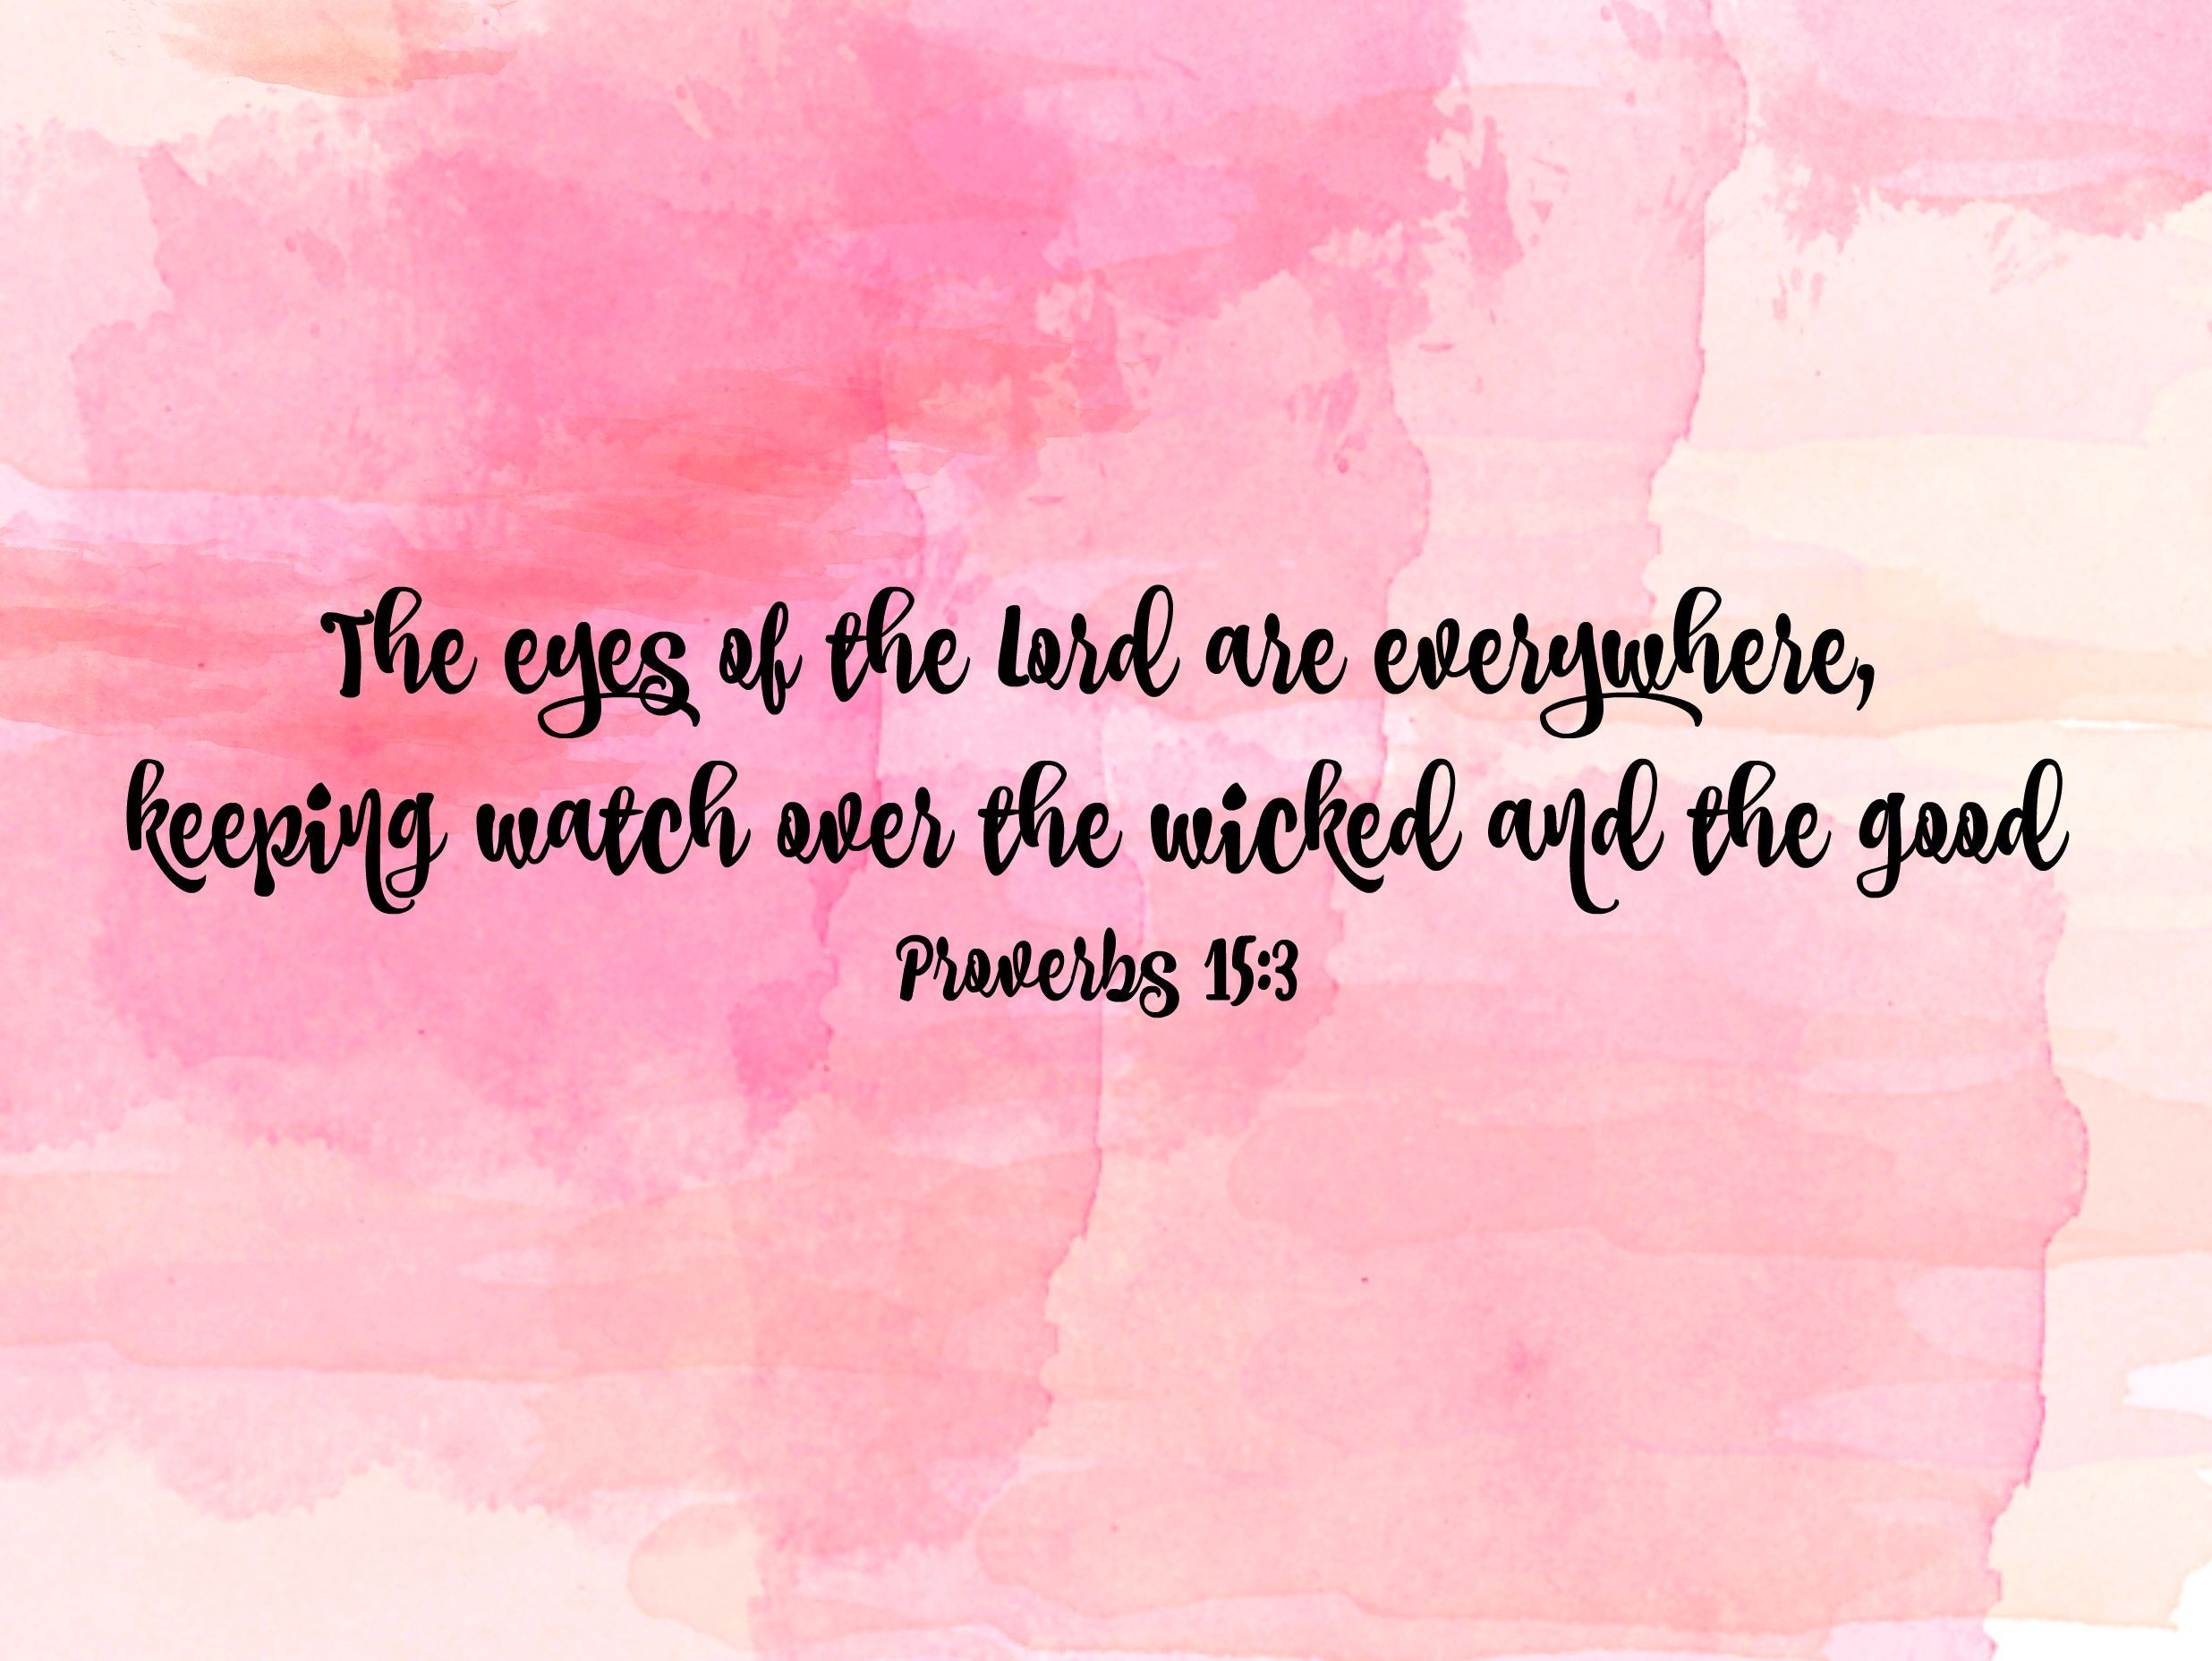 proverbs 15:3 bible quote pink watercolor desktop background. Bible quotes, Proverbs, Proverbs 15 3